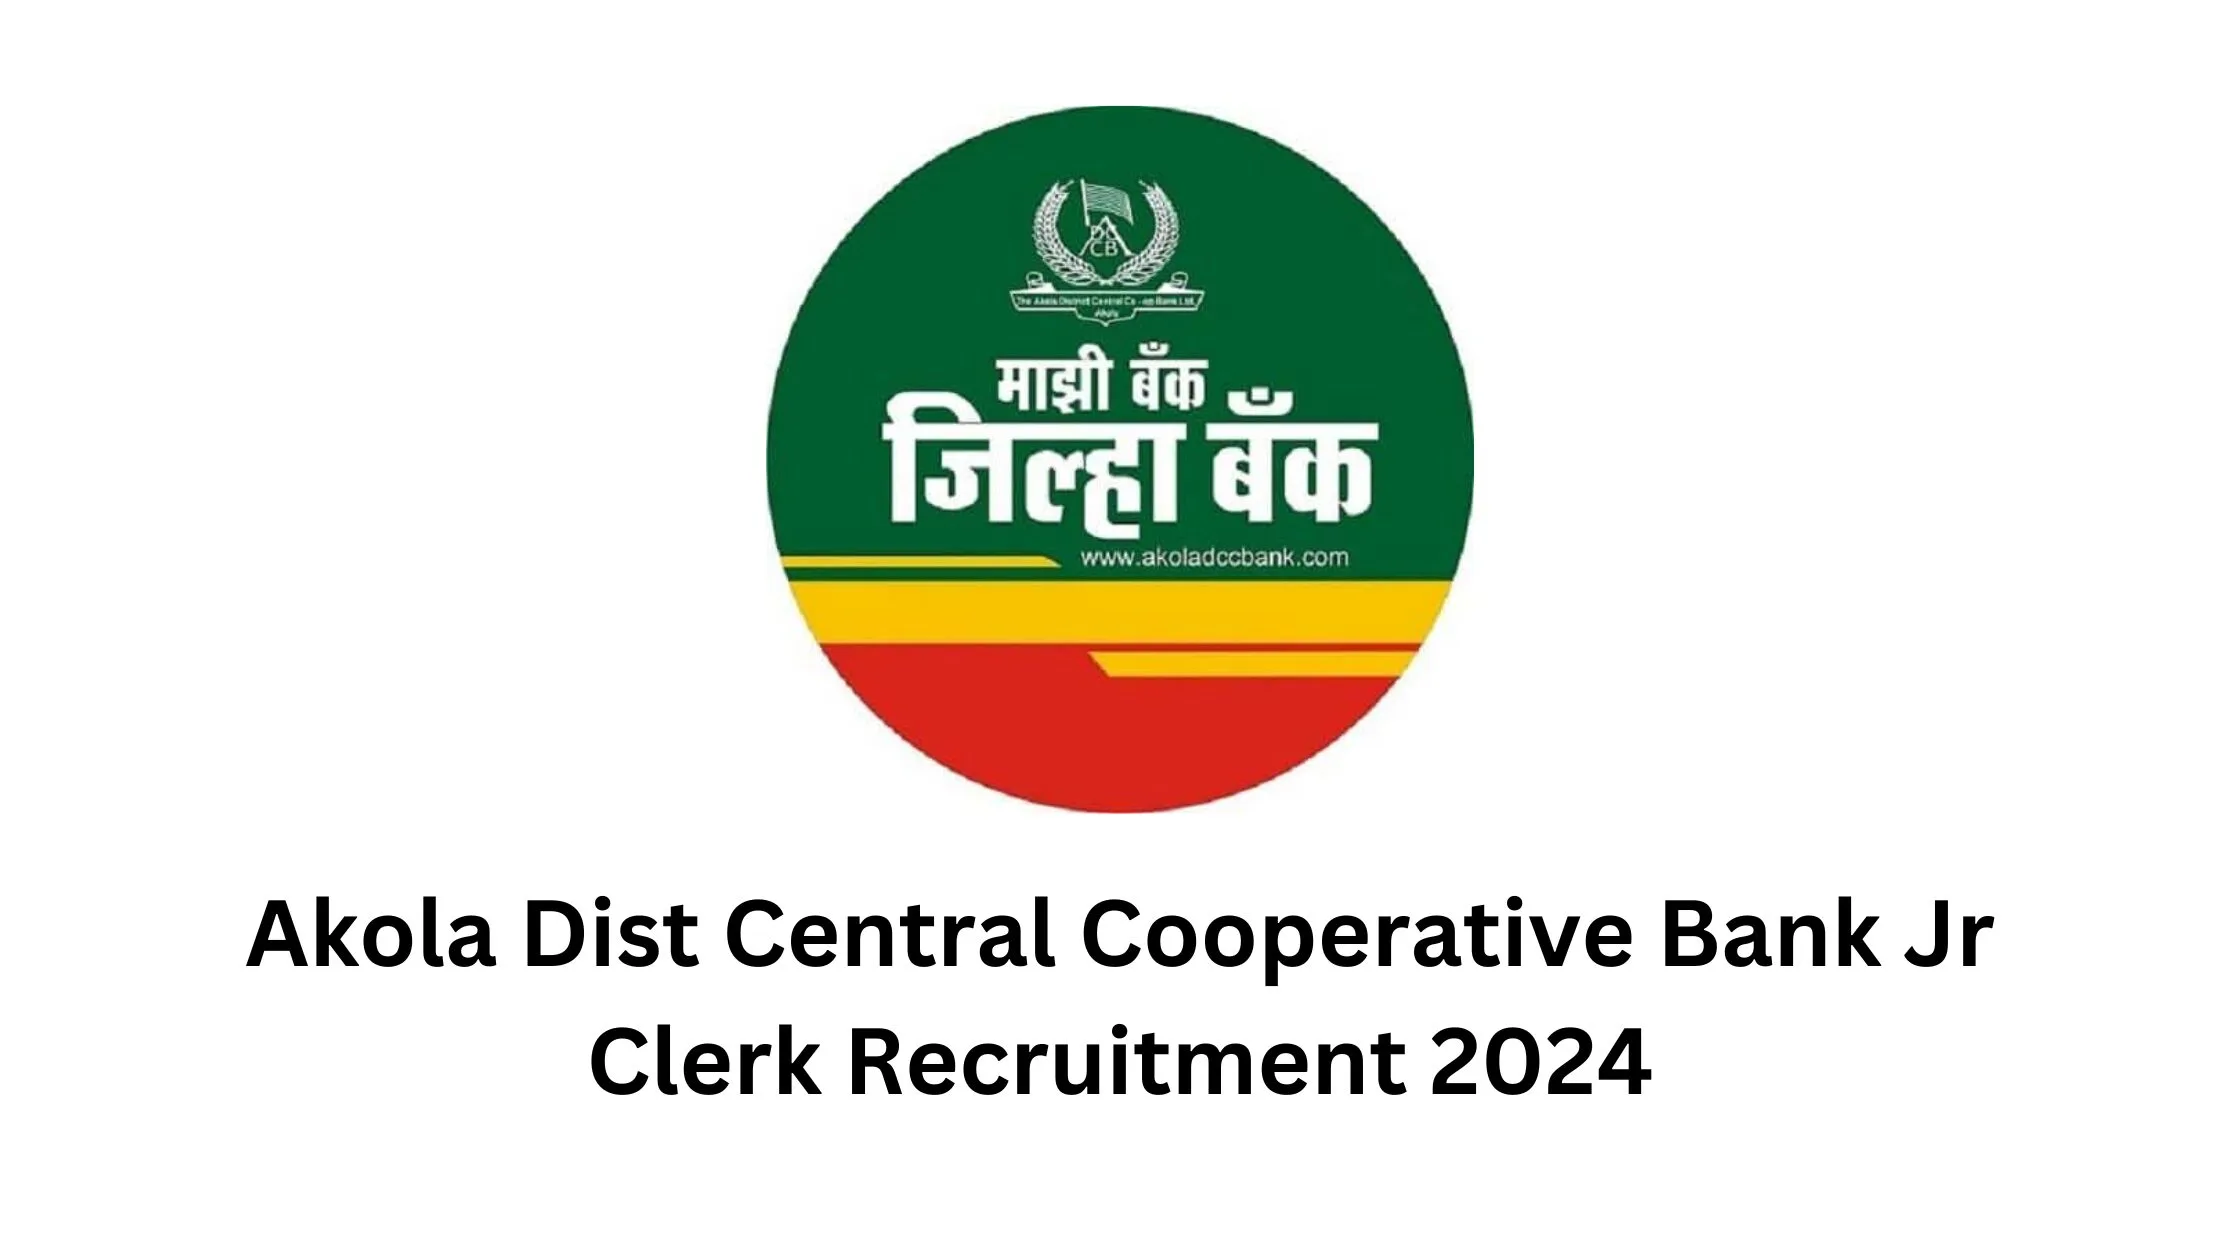 Akola Dist Central Cooperative Bank Jr Clerk Recruitment 2024